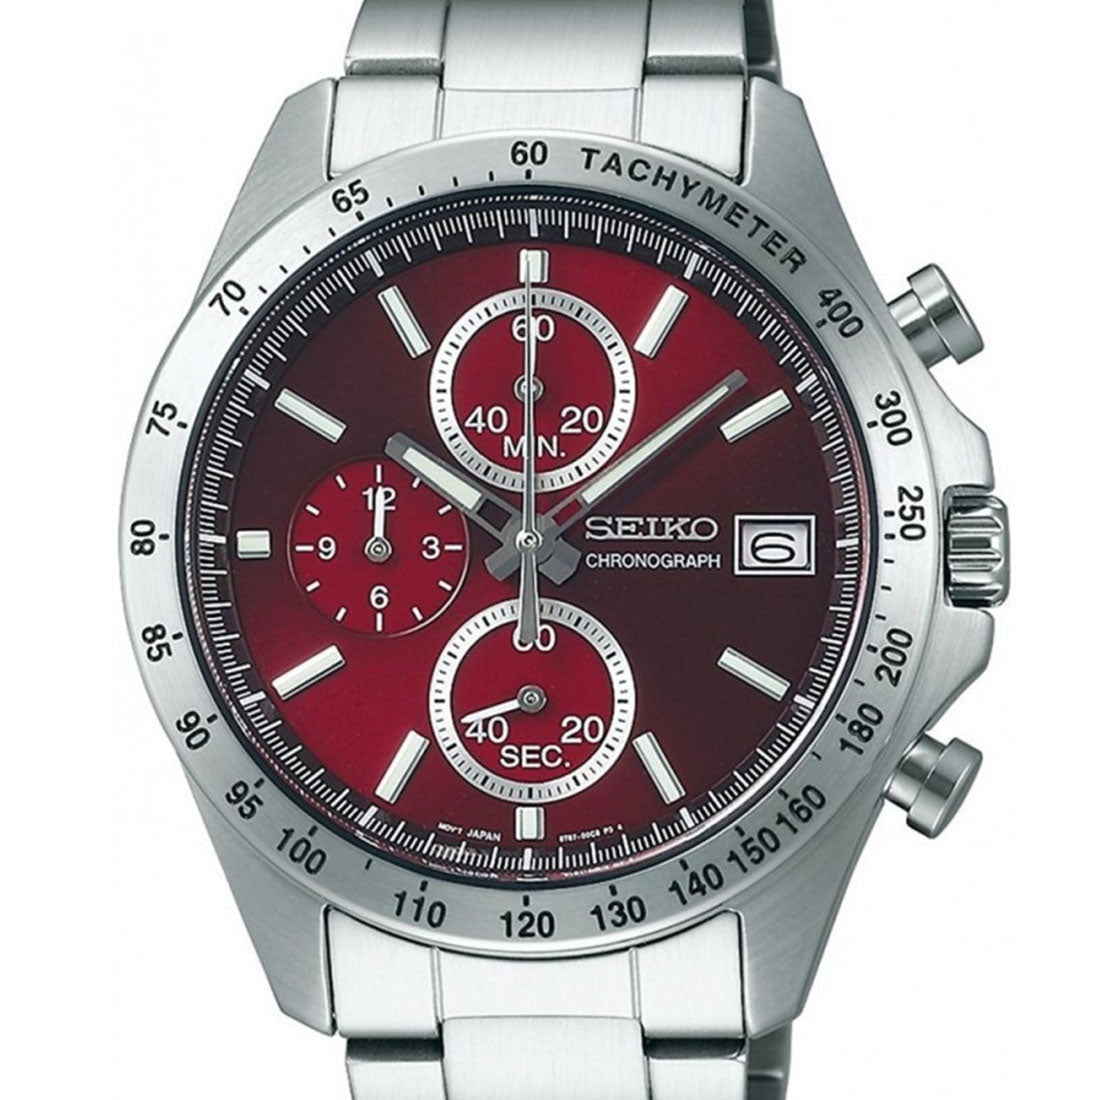 Seiko SBTR001 JDM Spirit Selection Red Dial Chronograph Quartz Stainless Steel Watch